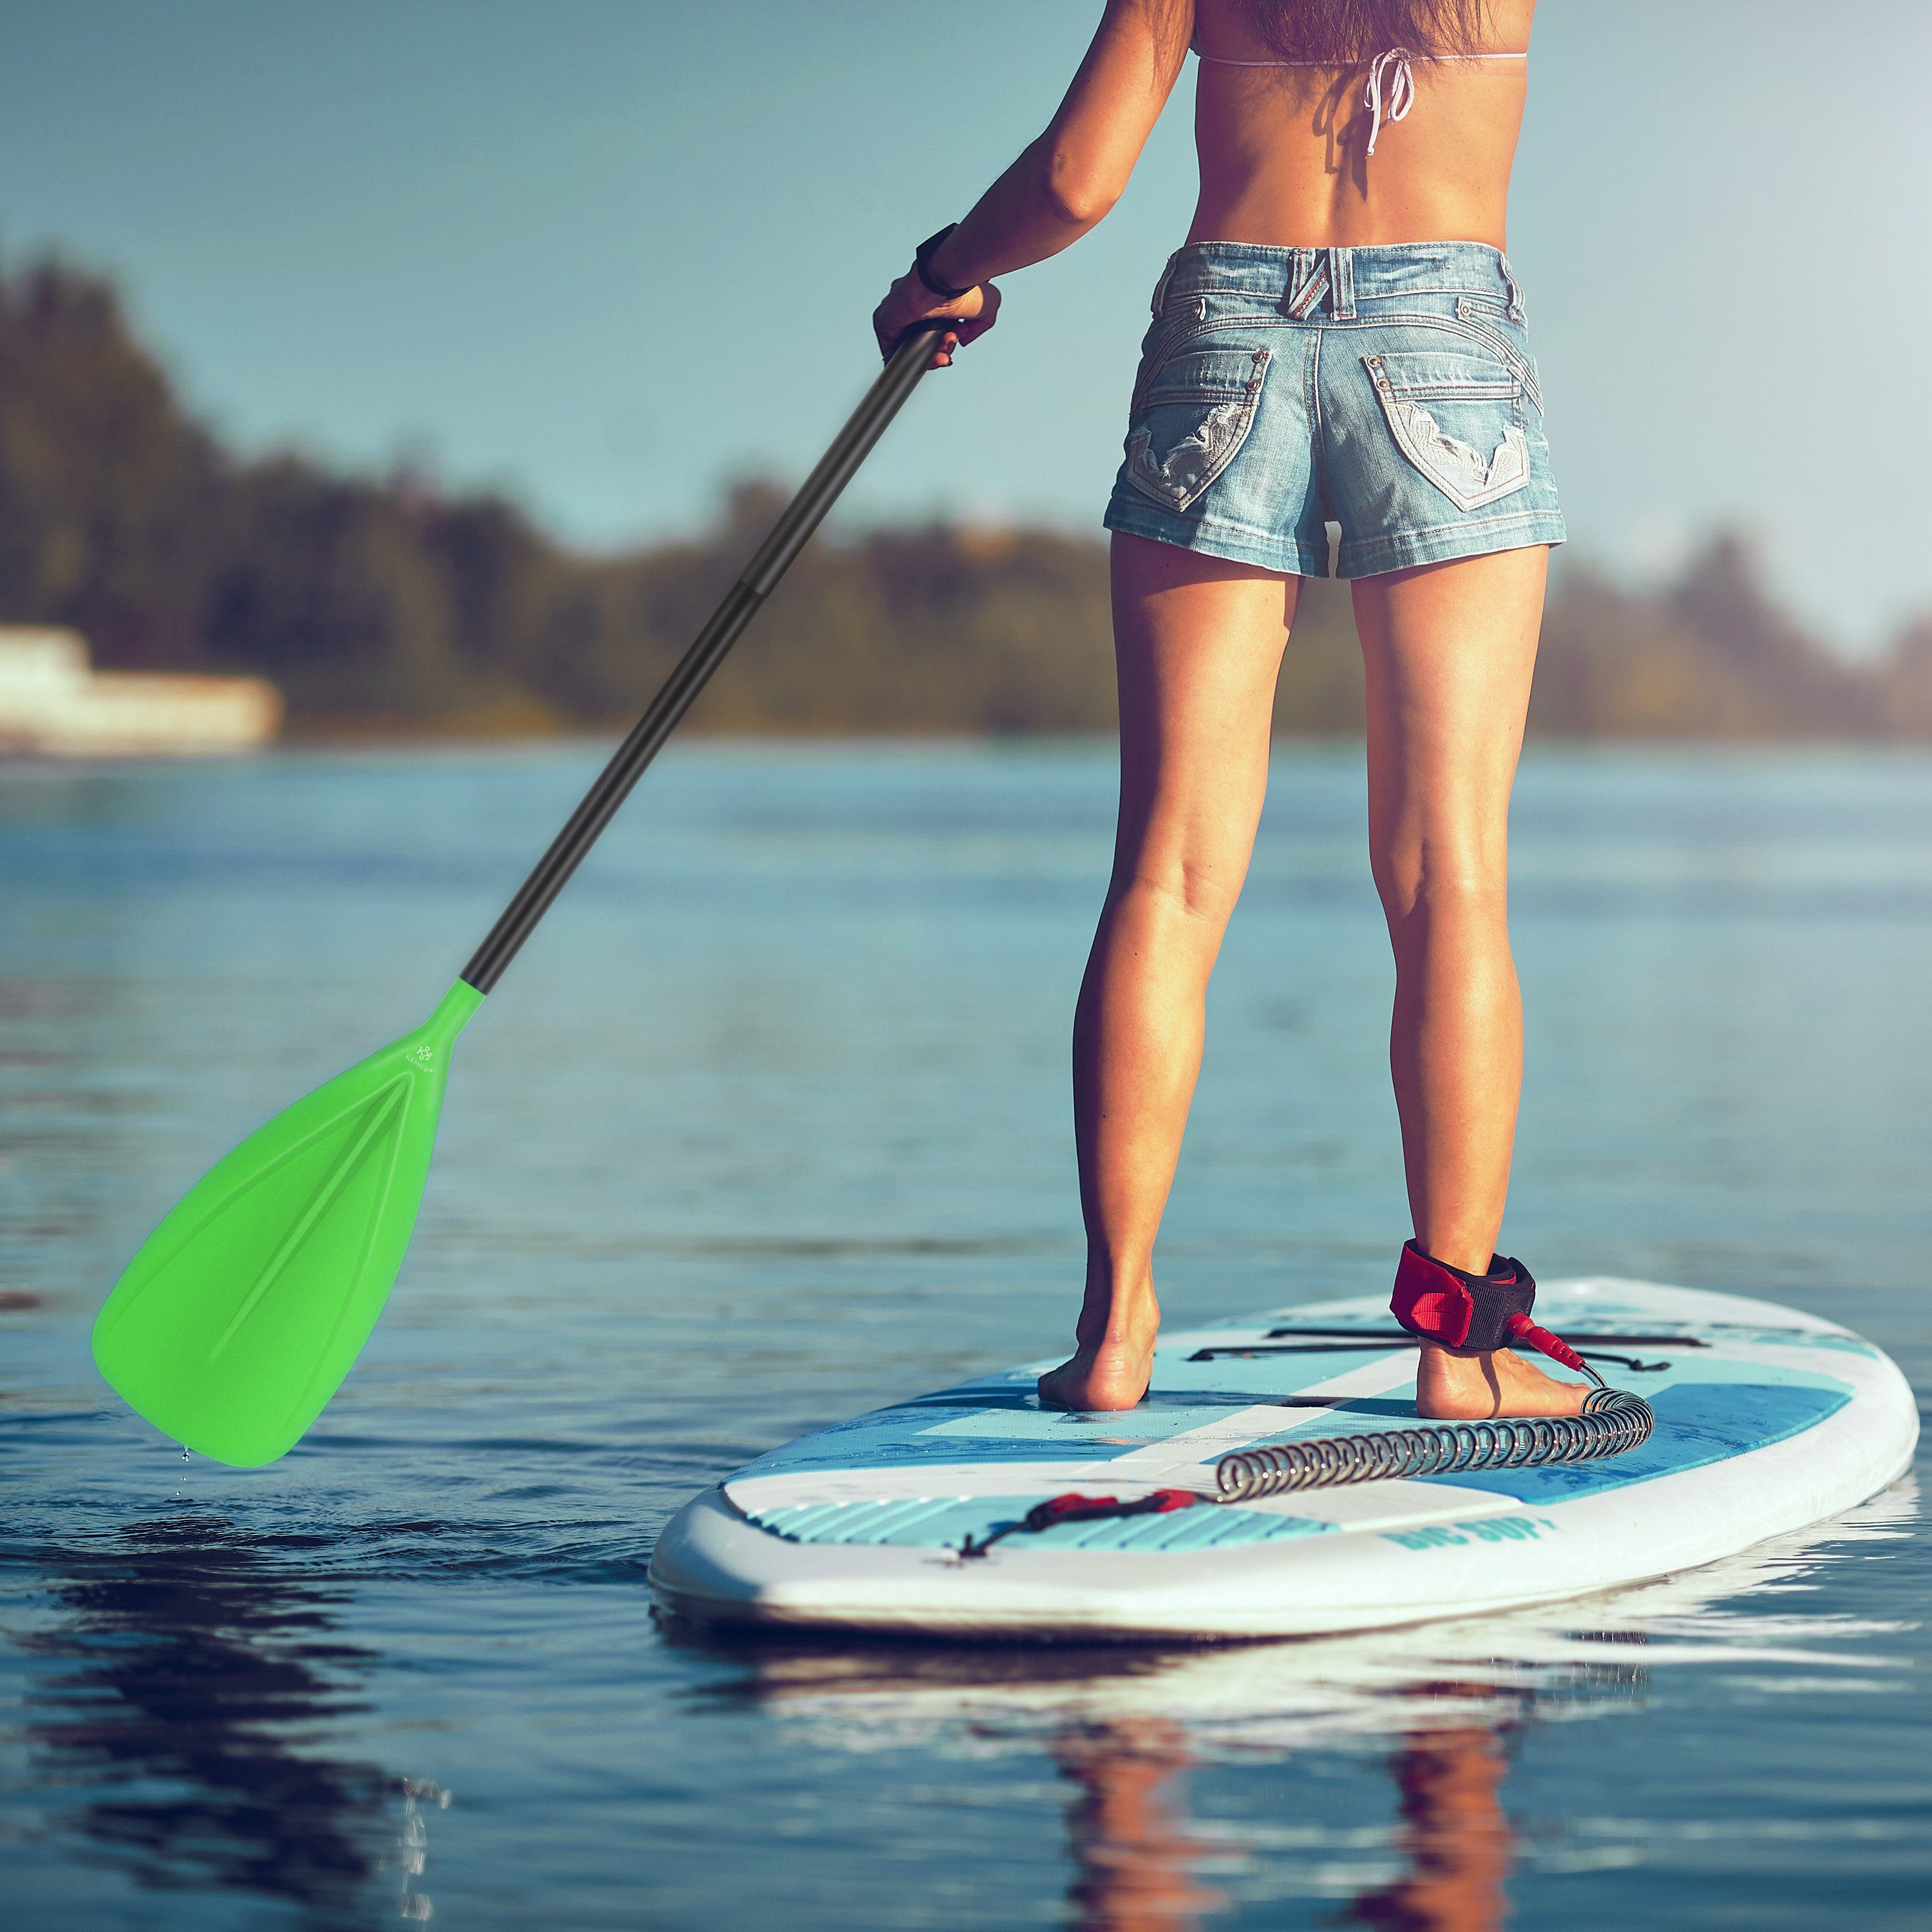 grün KESSER Paddling Kayak SUP Paddle 3-teilig SUP-Paddel, Board Stand-Up für